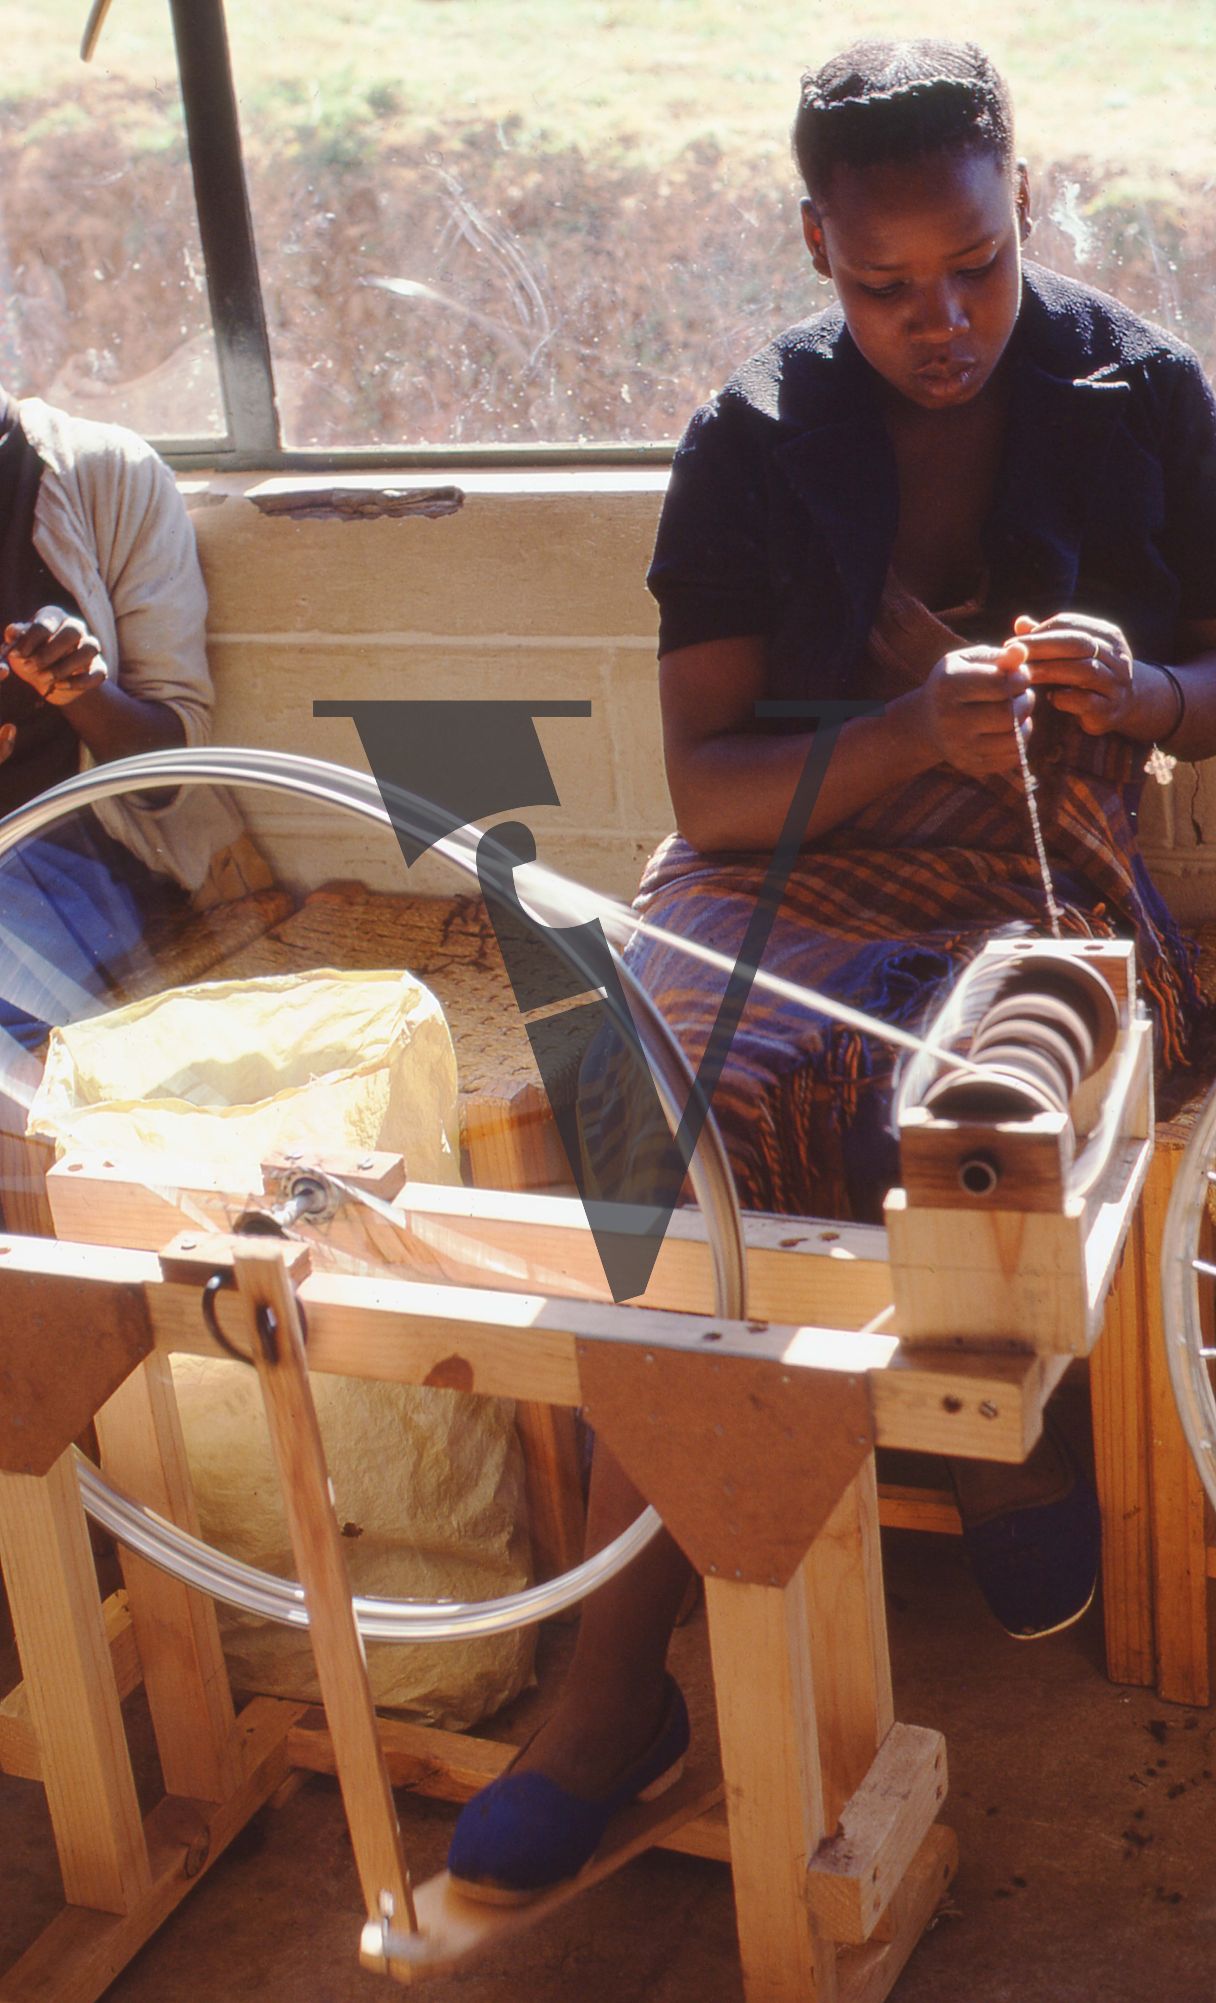 Lesotho, Handspun mohair farming community, spinning wheel, woman at work.